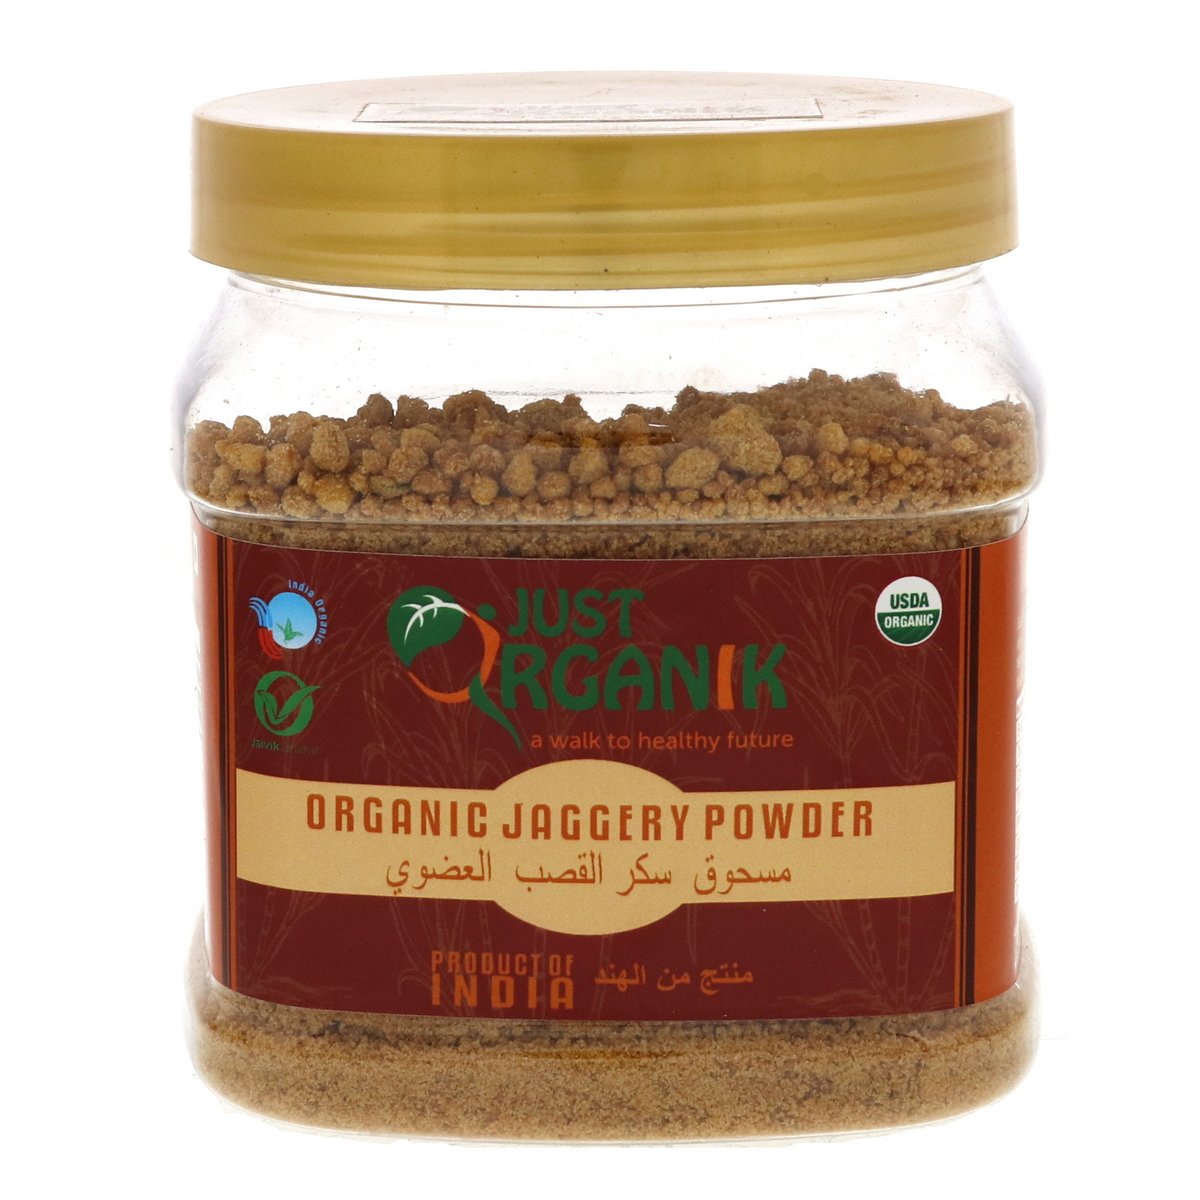 Just Organik Organic Jaggery Powder 500 g